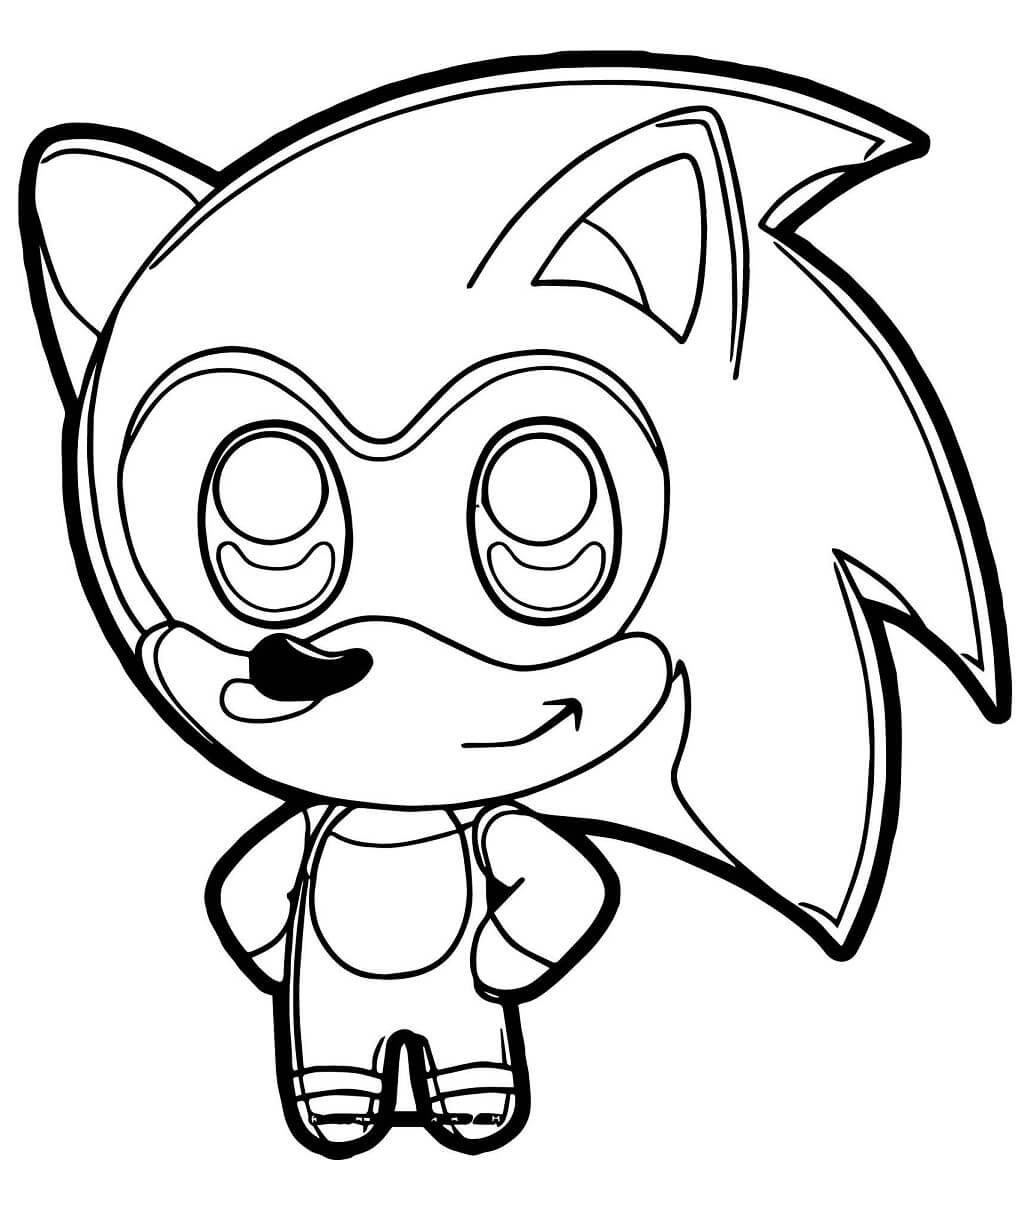 Chibi Sonic para colorear imprimir e dibujar ColoringOnly Com